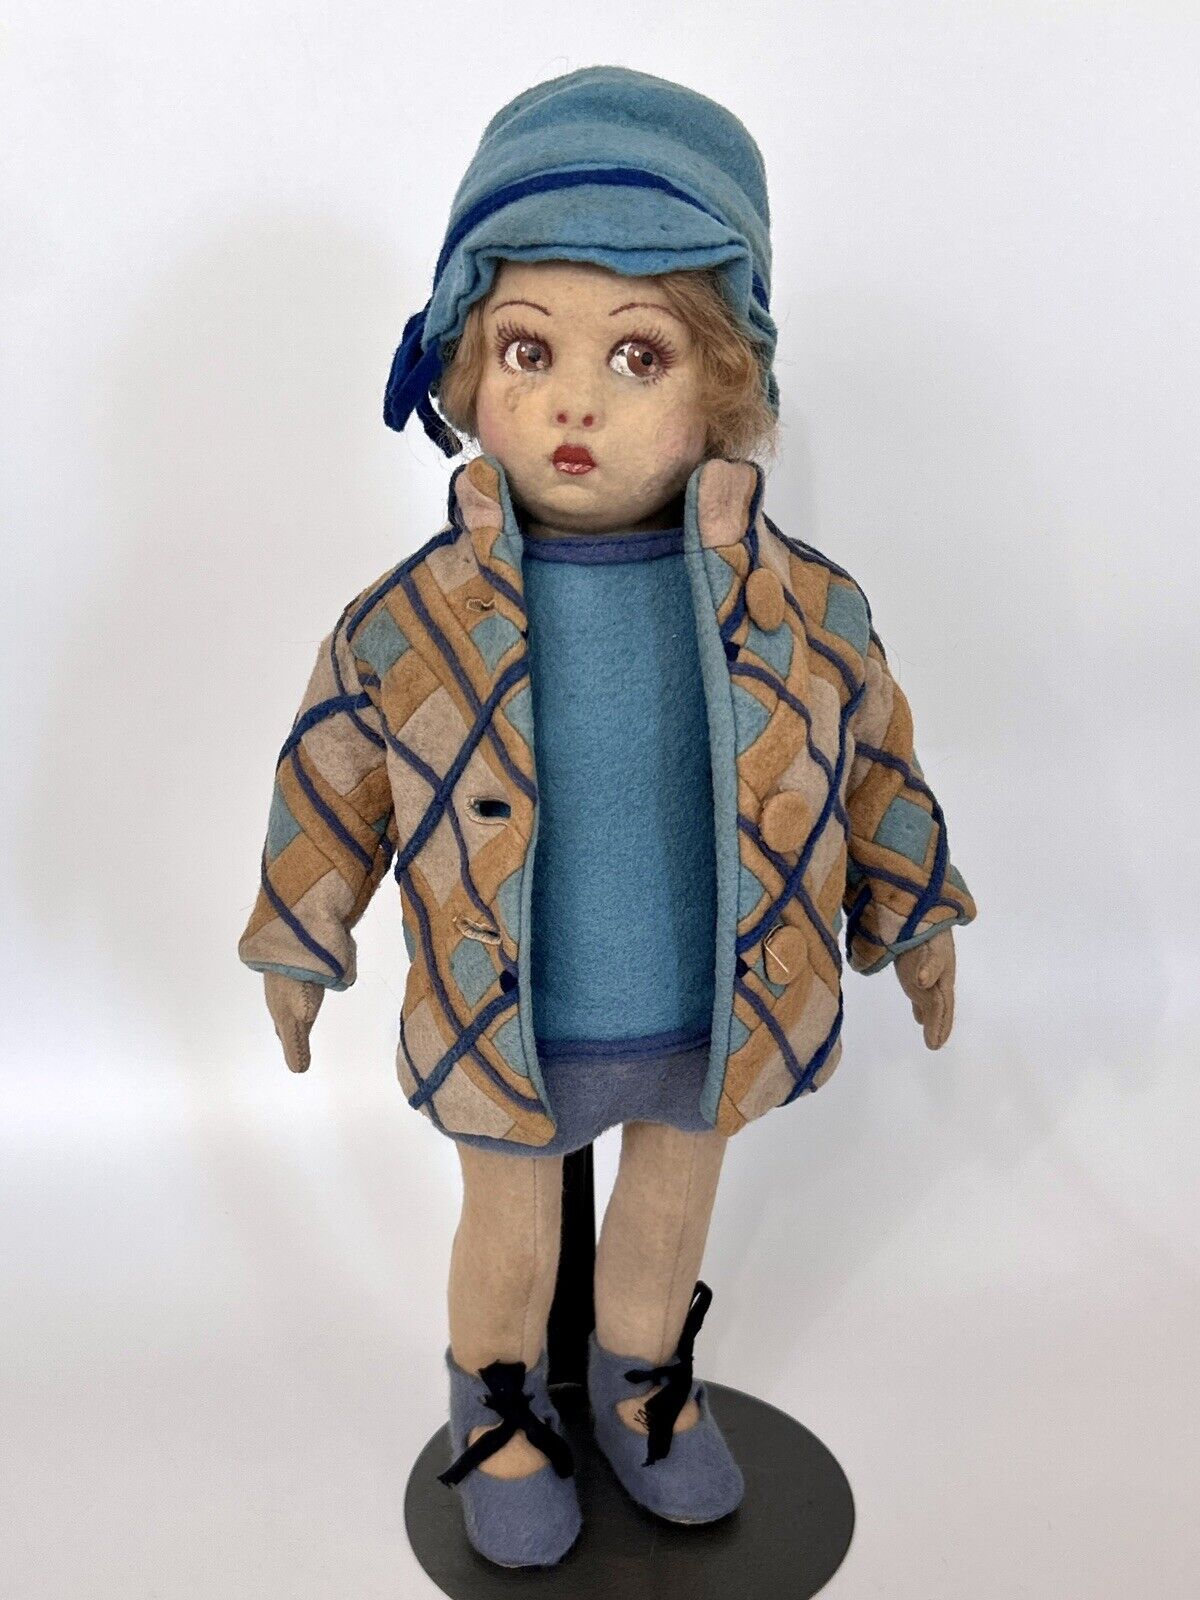 Antique All Original Lenci Doll Series 450 in Series 2000 Costume Art Deco 1920s